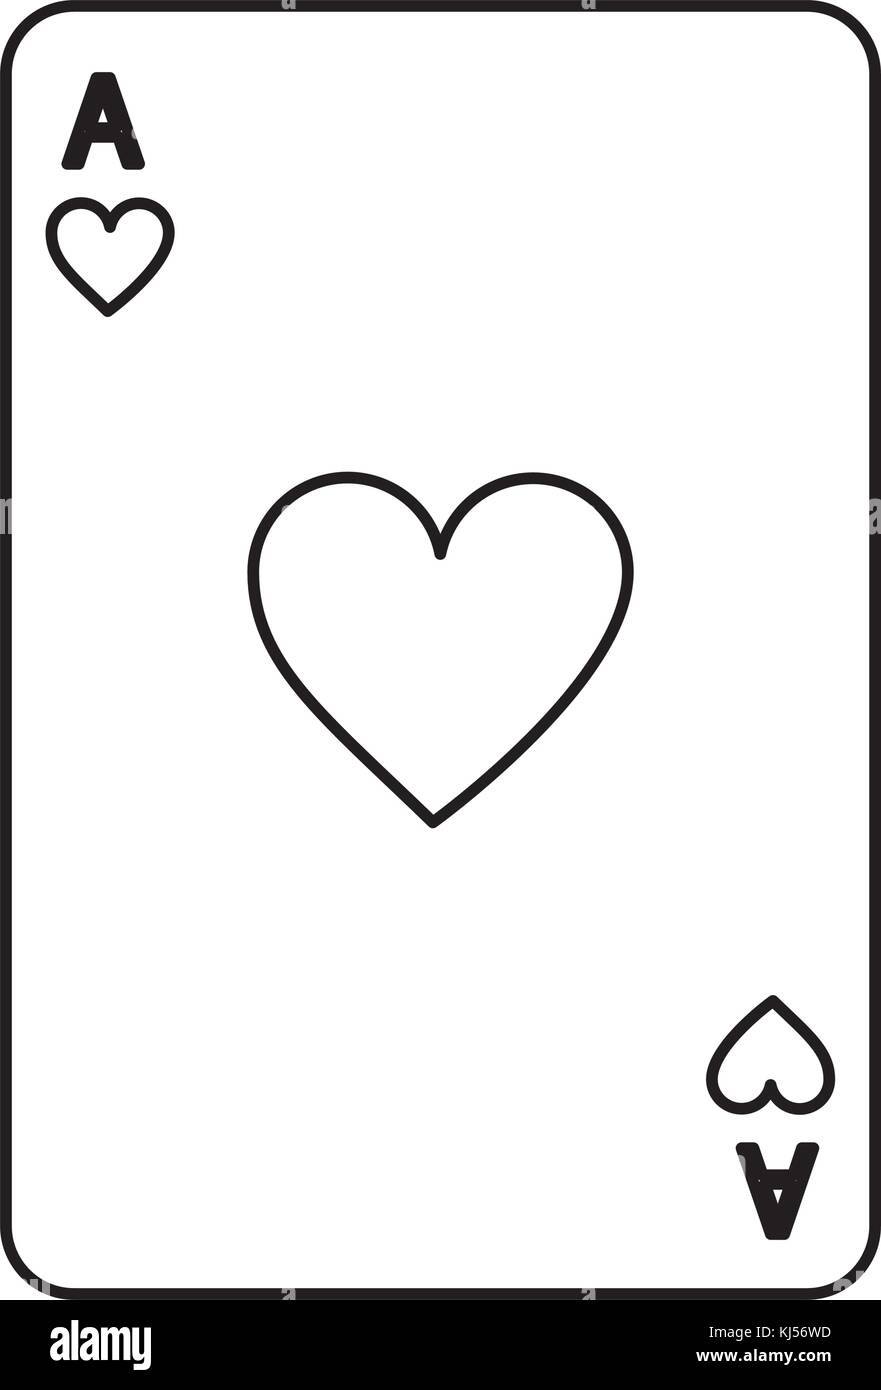 Poker Casino ace Herz Karte spielen Symbol Stock-Vektorgrafik - Alamy